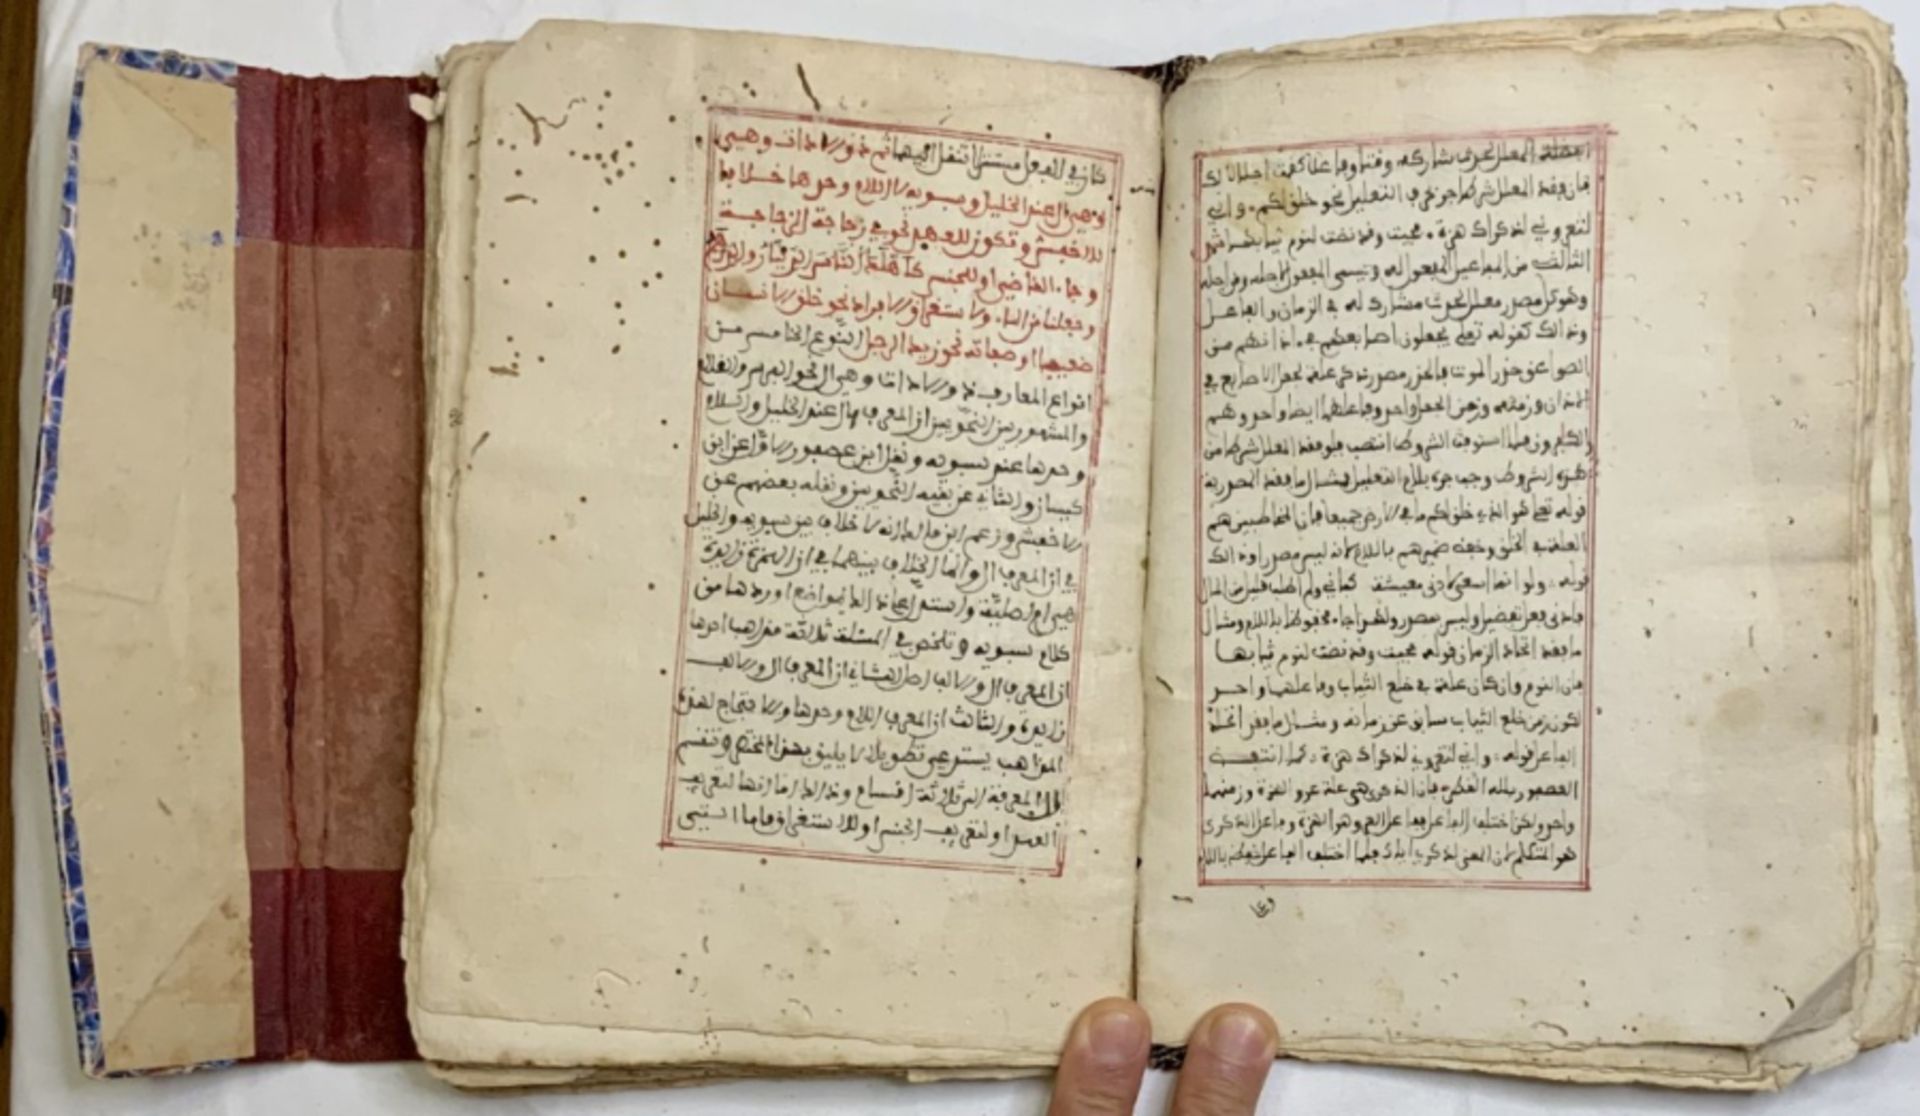 18th century Islamic manuscript on morphology and rhetoric - Image 7 of 18